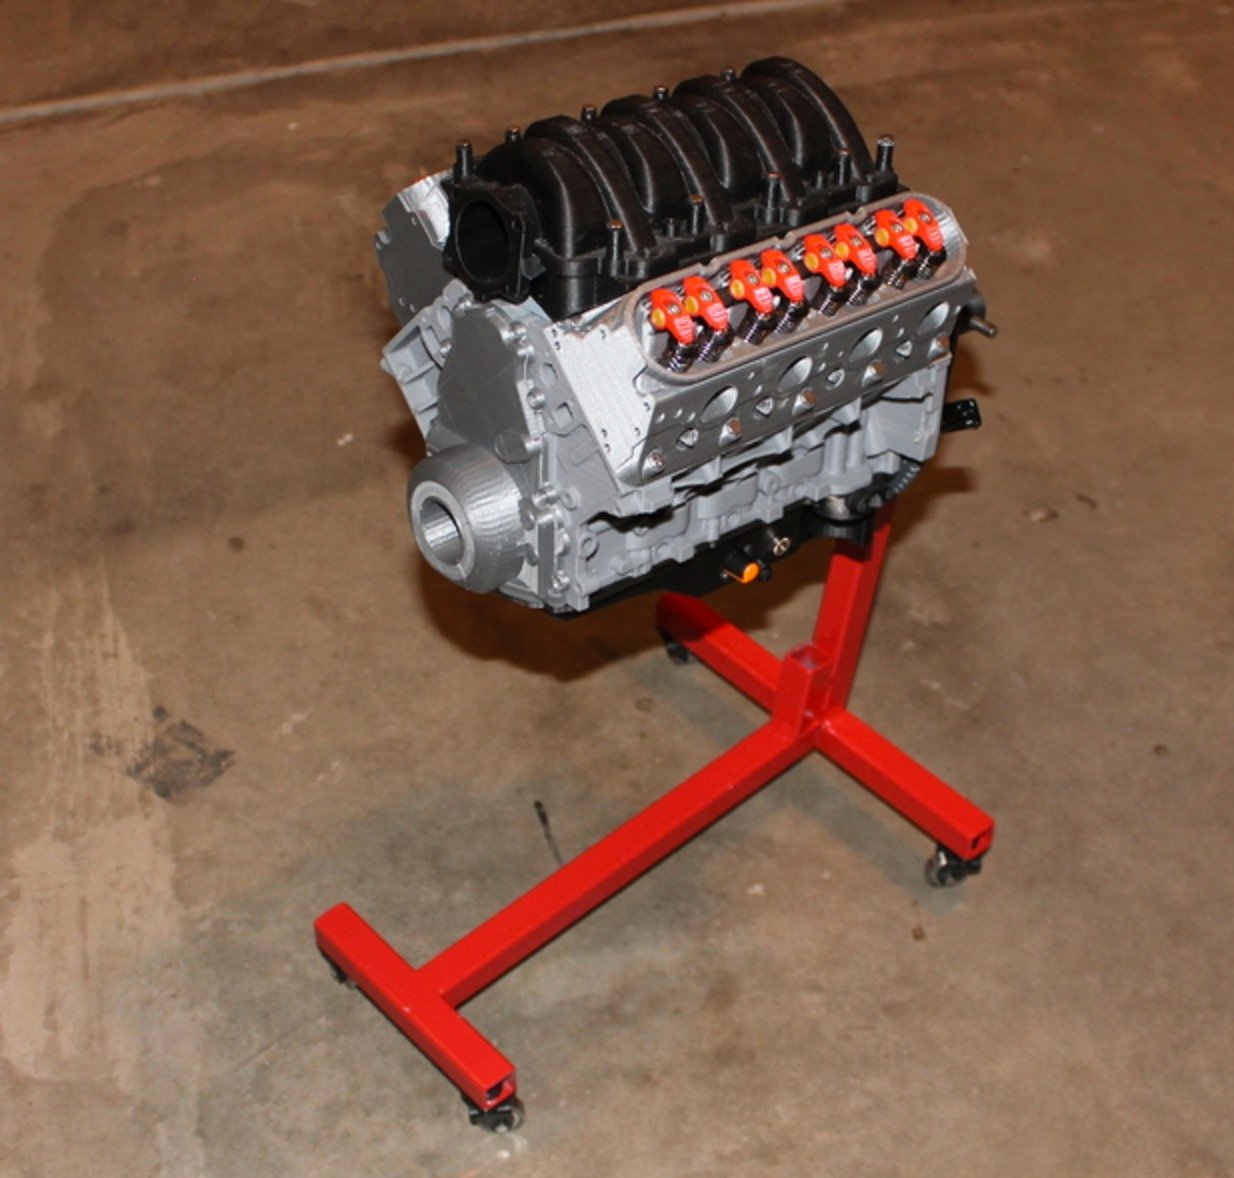  A full 3D printed replica of a V8 engine 